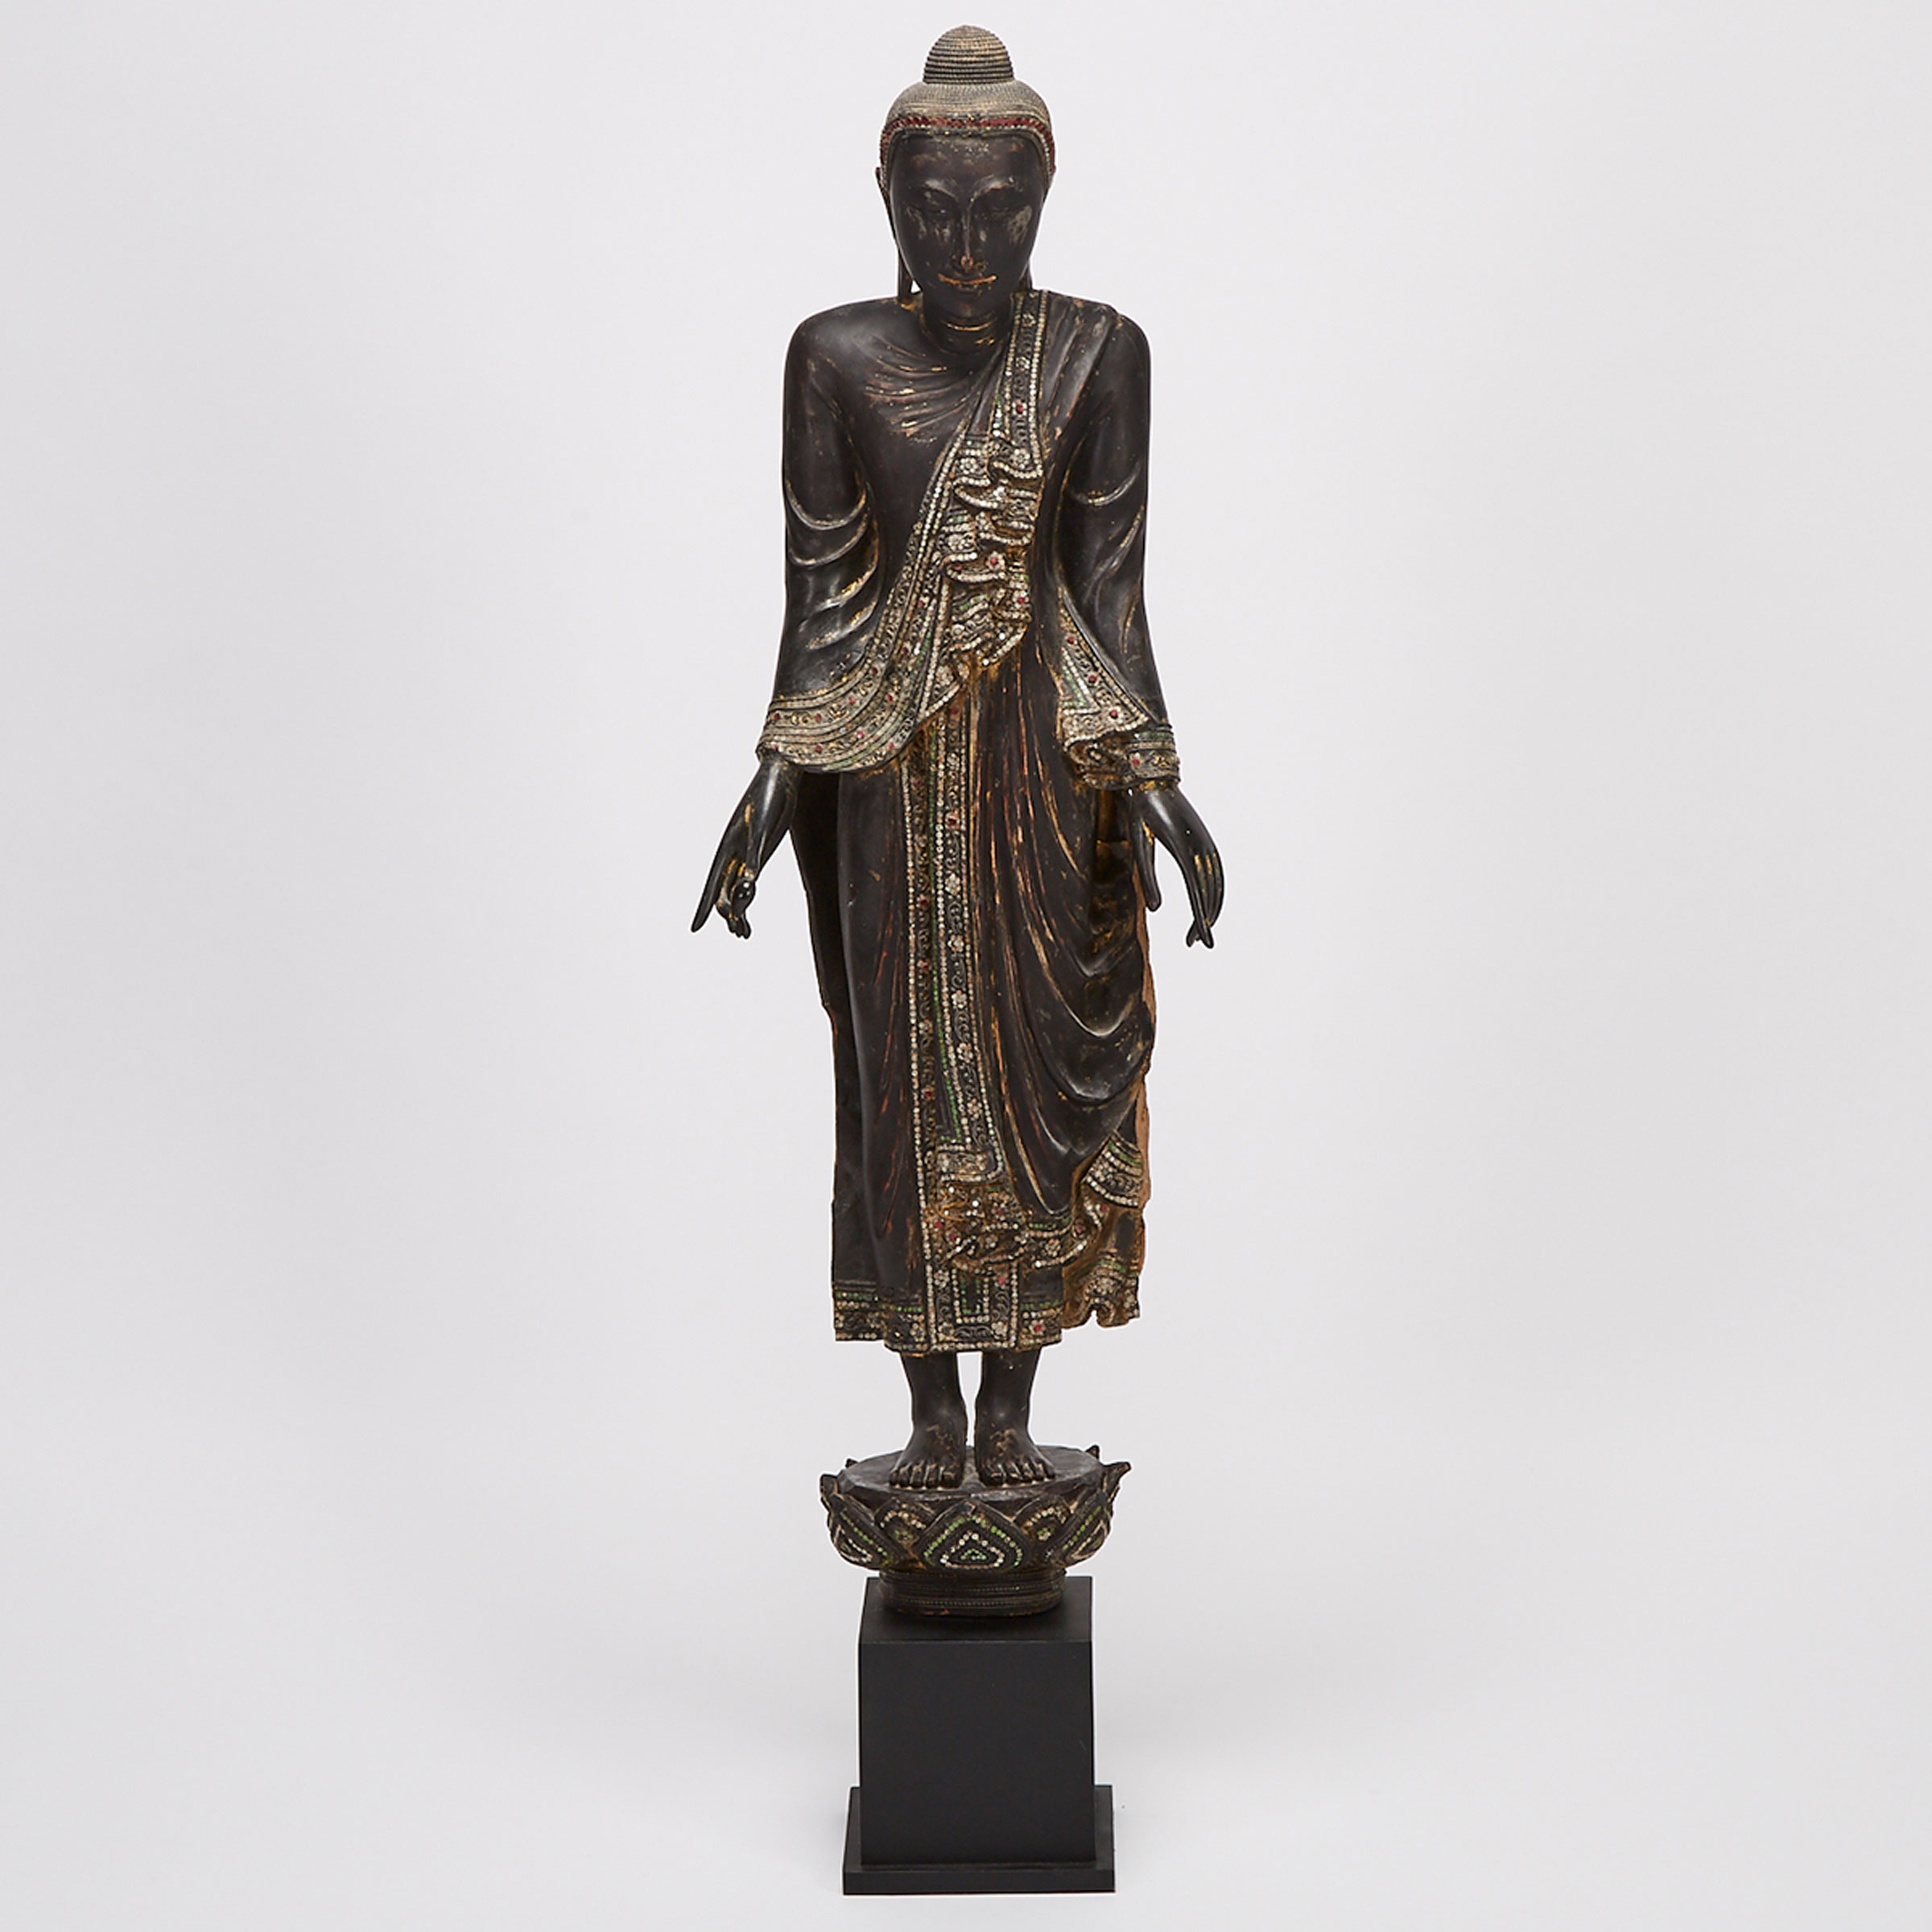 A Standing Black Lacquer Wood Buddha, Mandalay Period, Burma, 19th Century